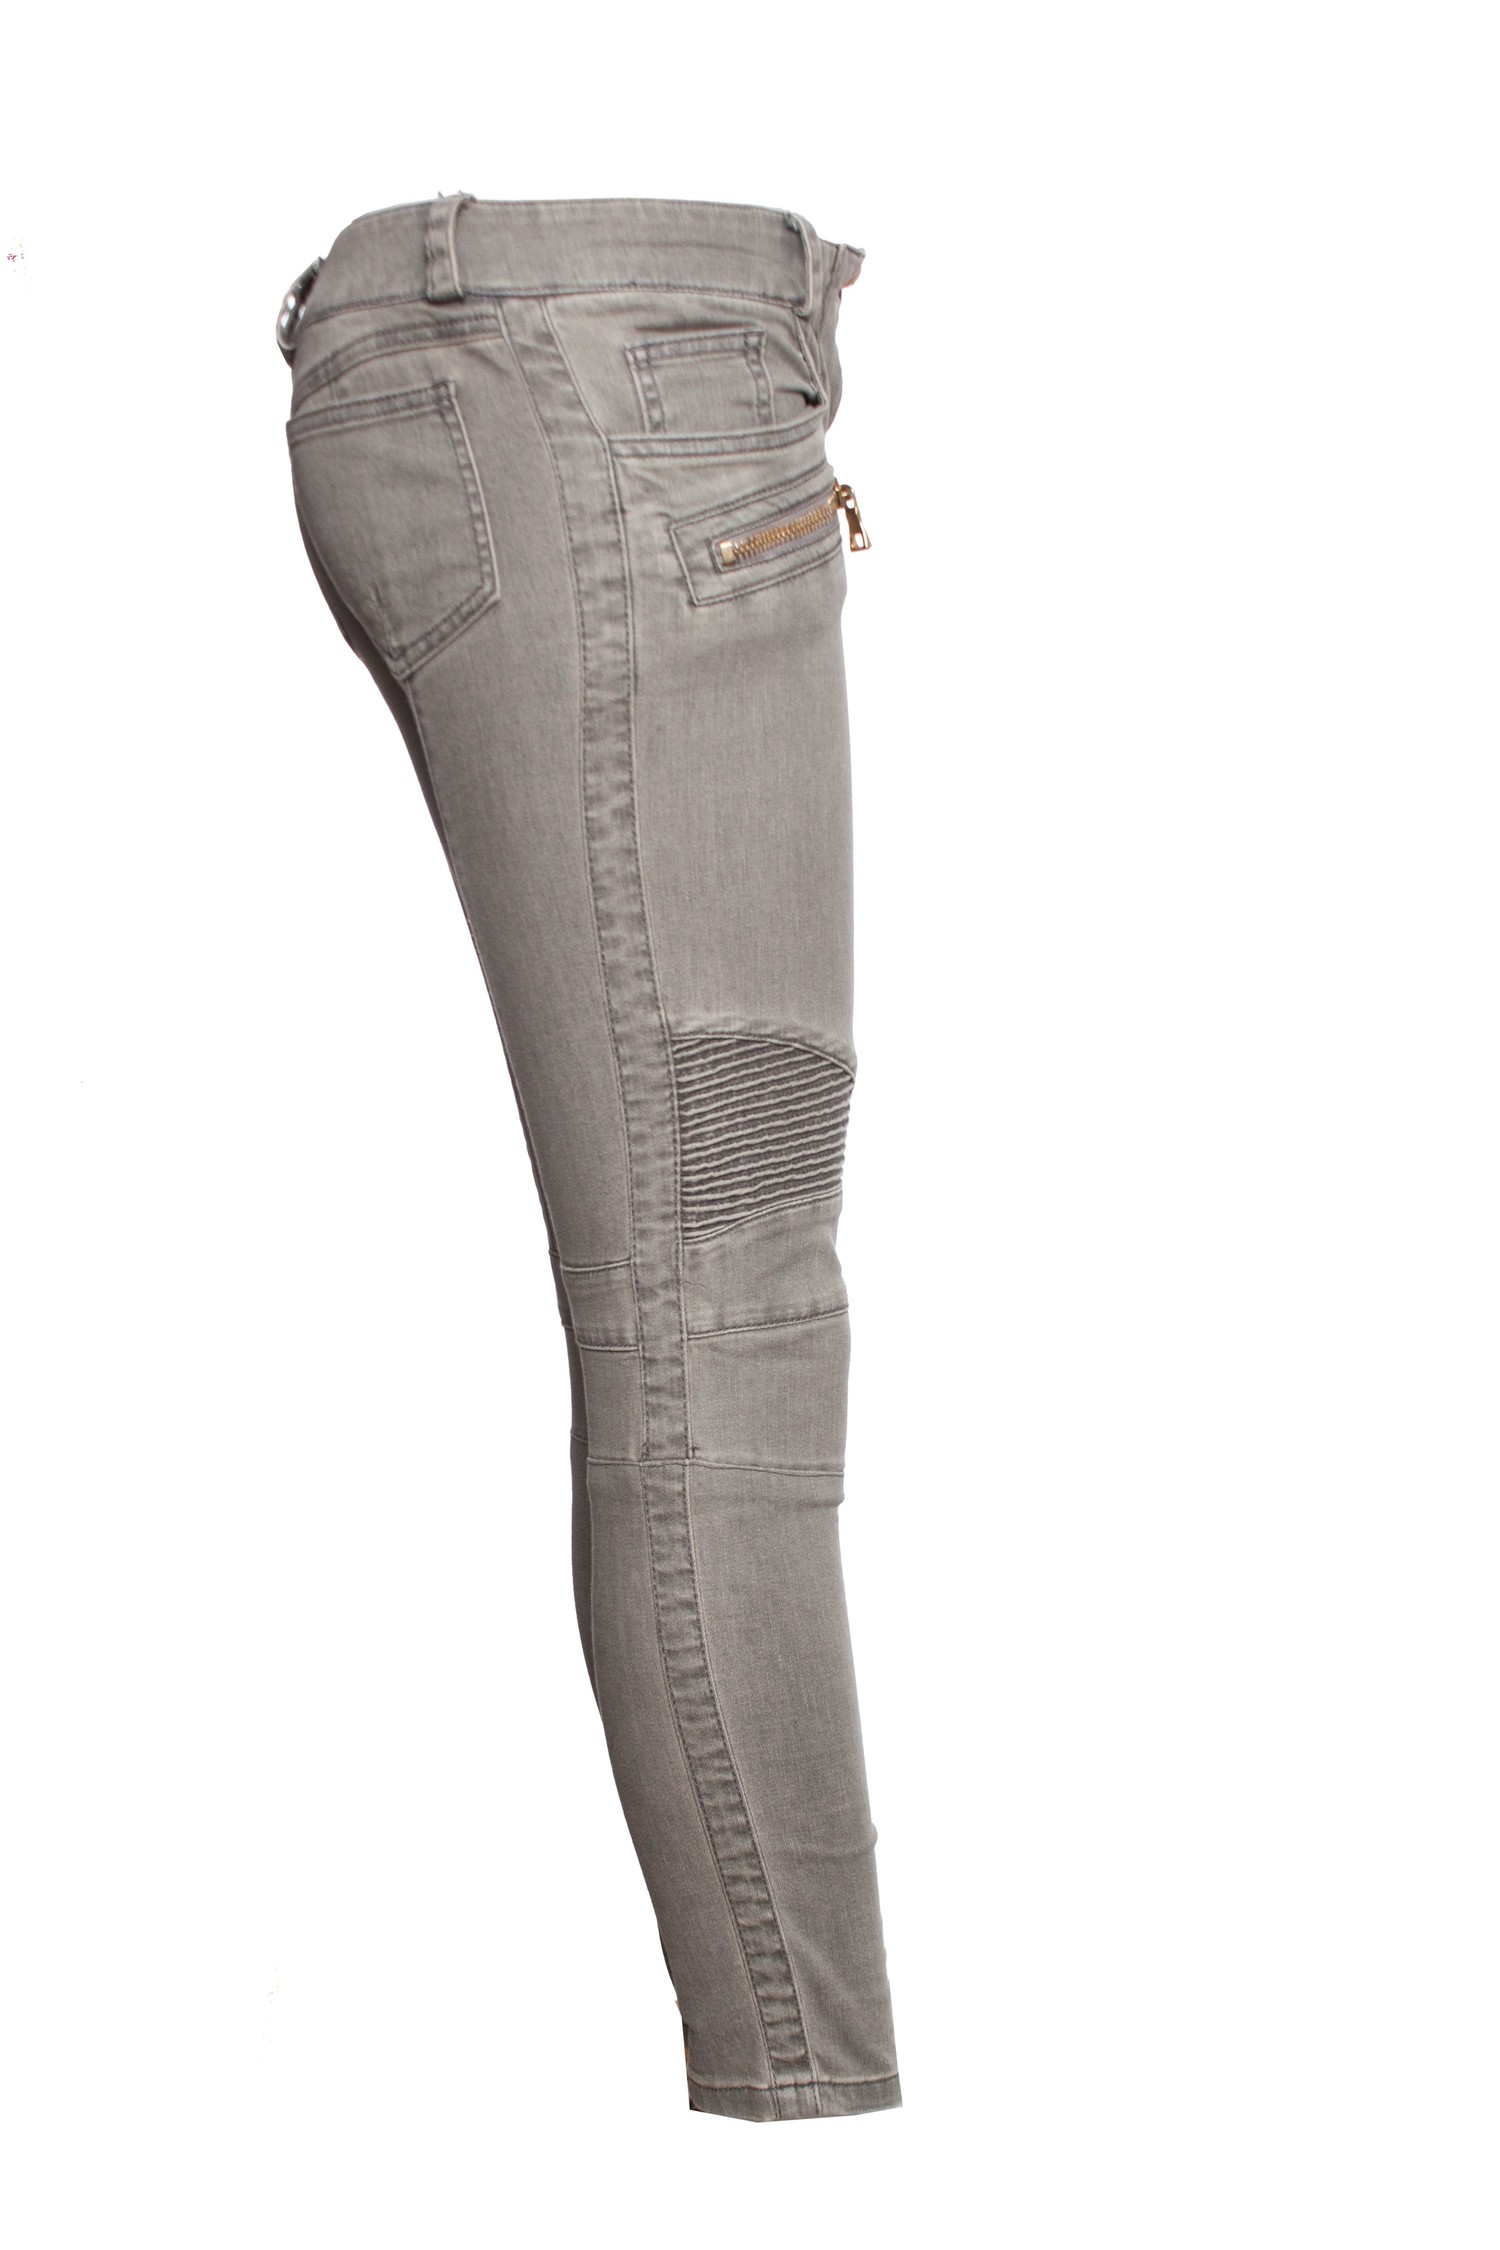 Balmain, jeans grey. - Unique Designer Pieces